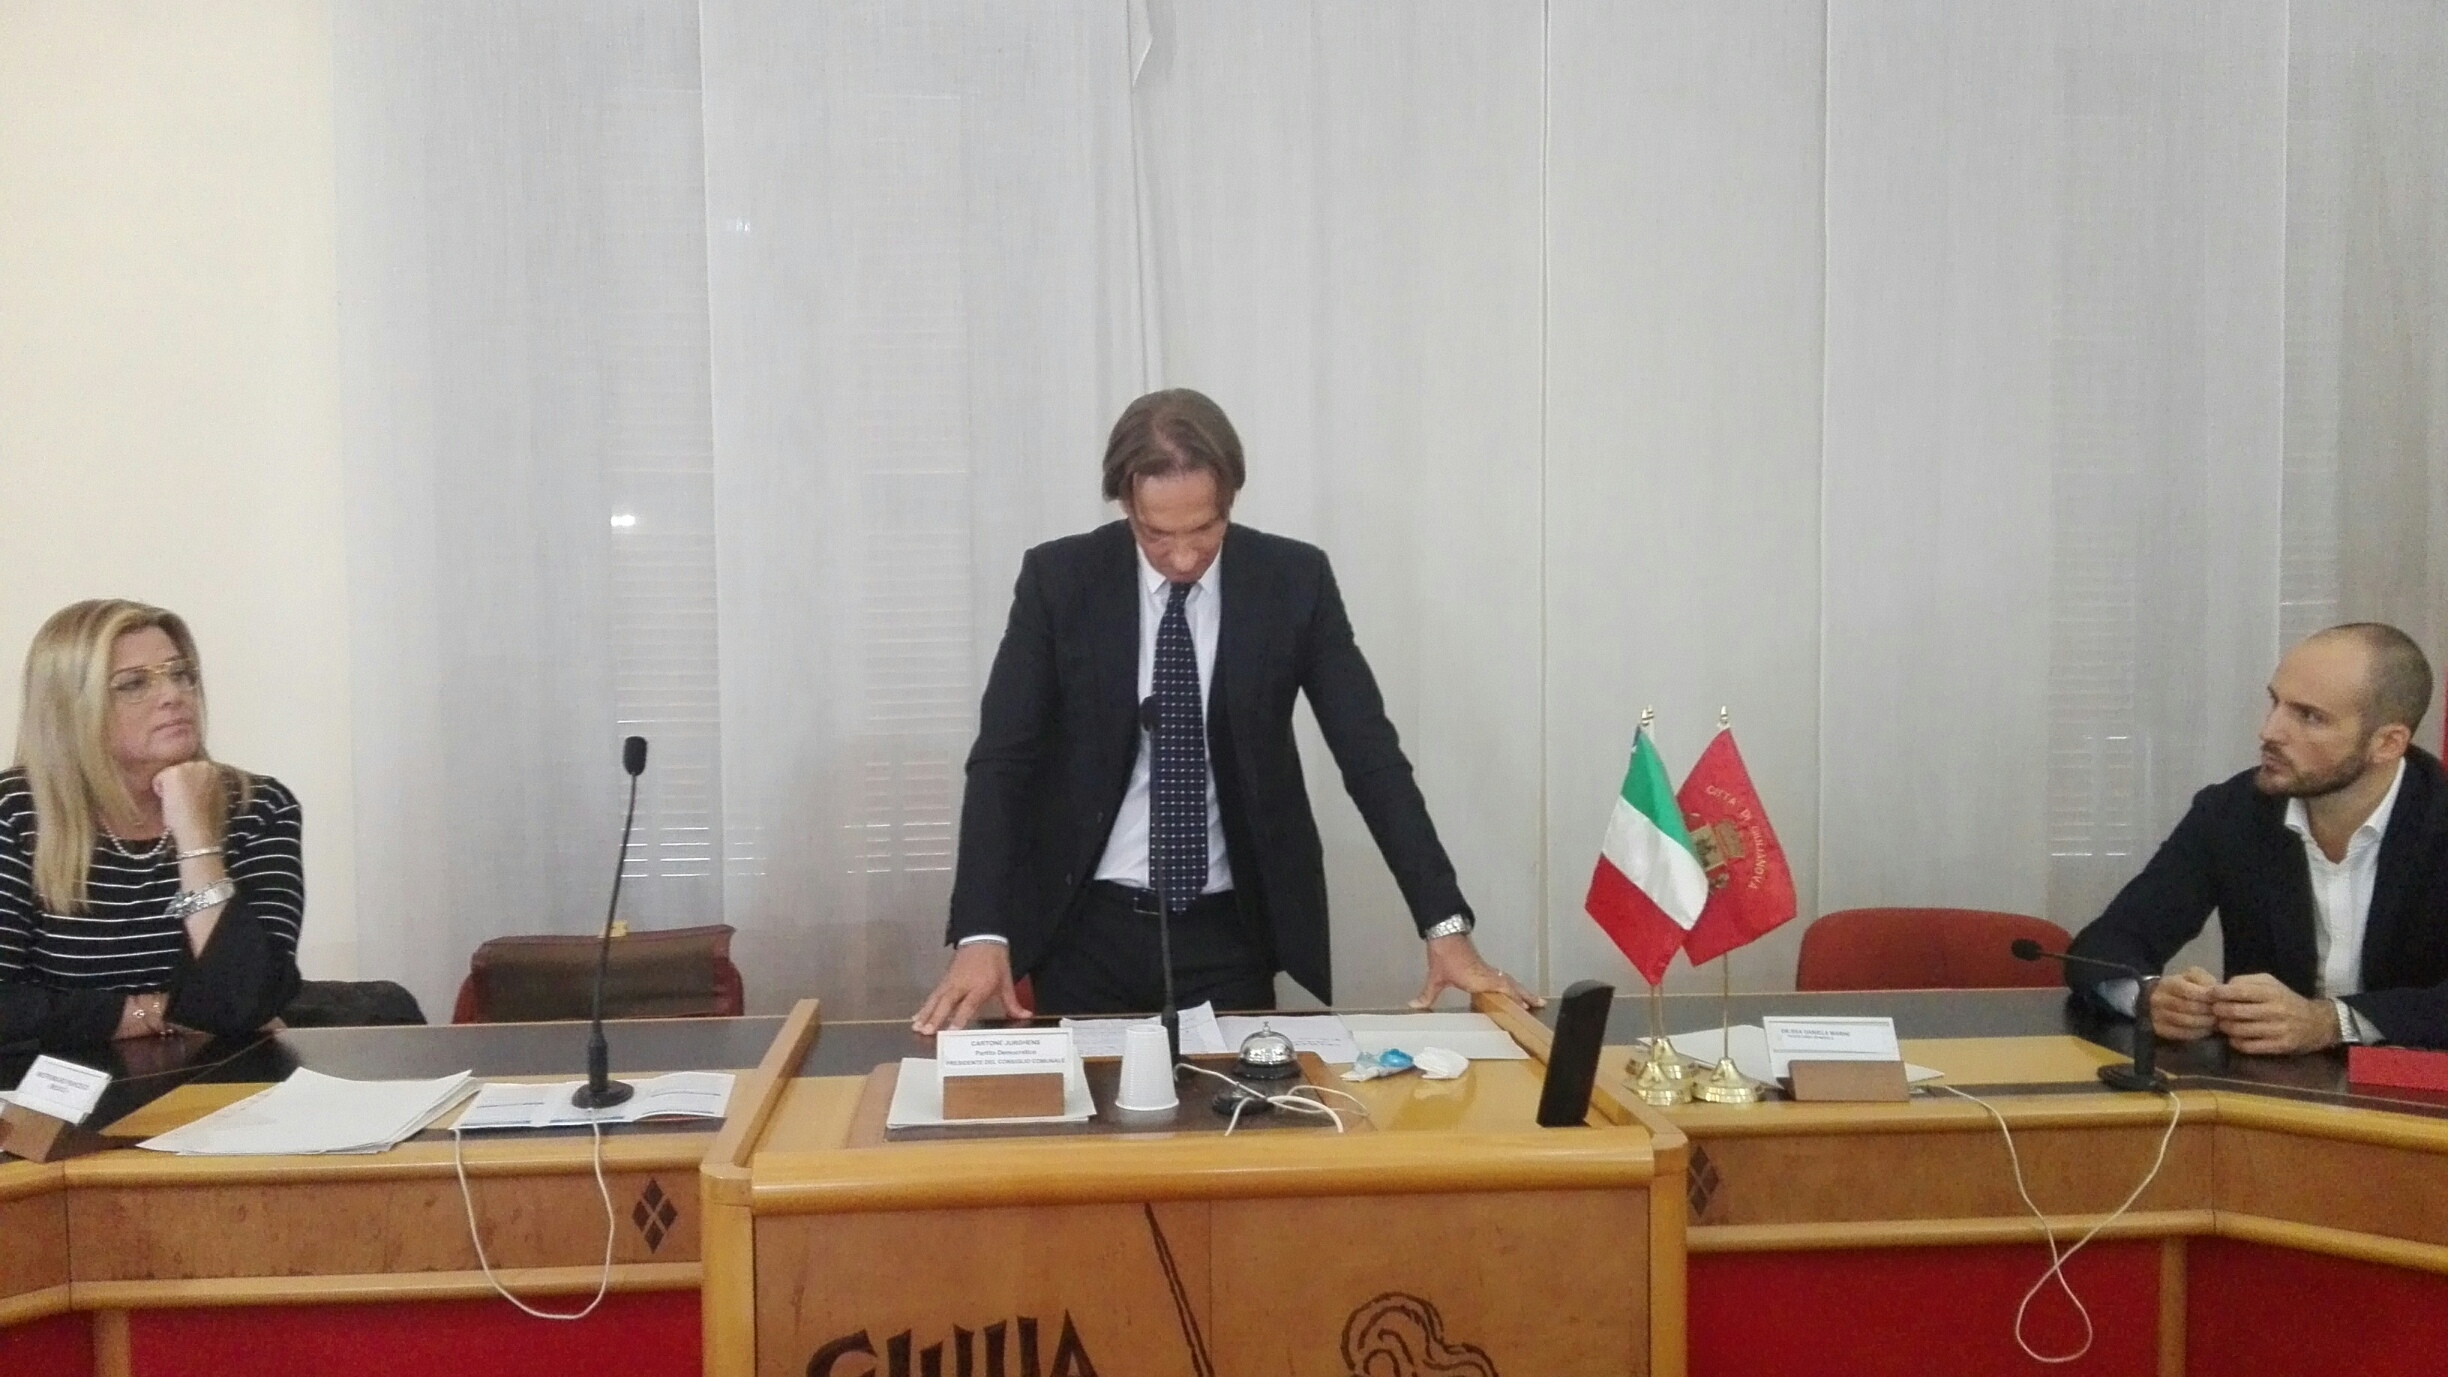 conferenza stampa dimissioni sindaco.JPG